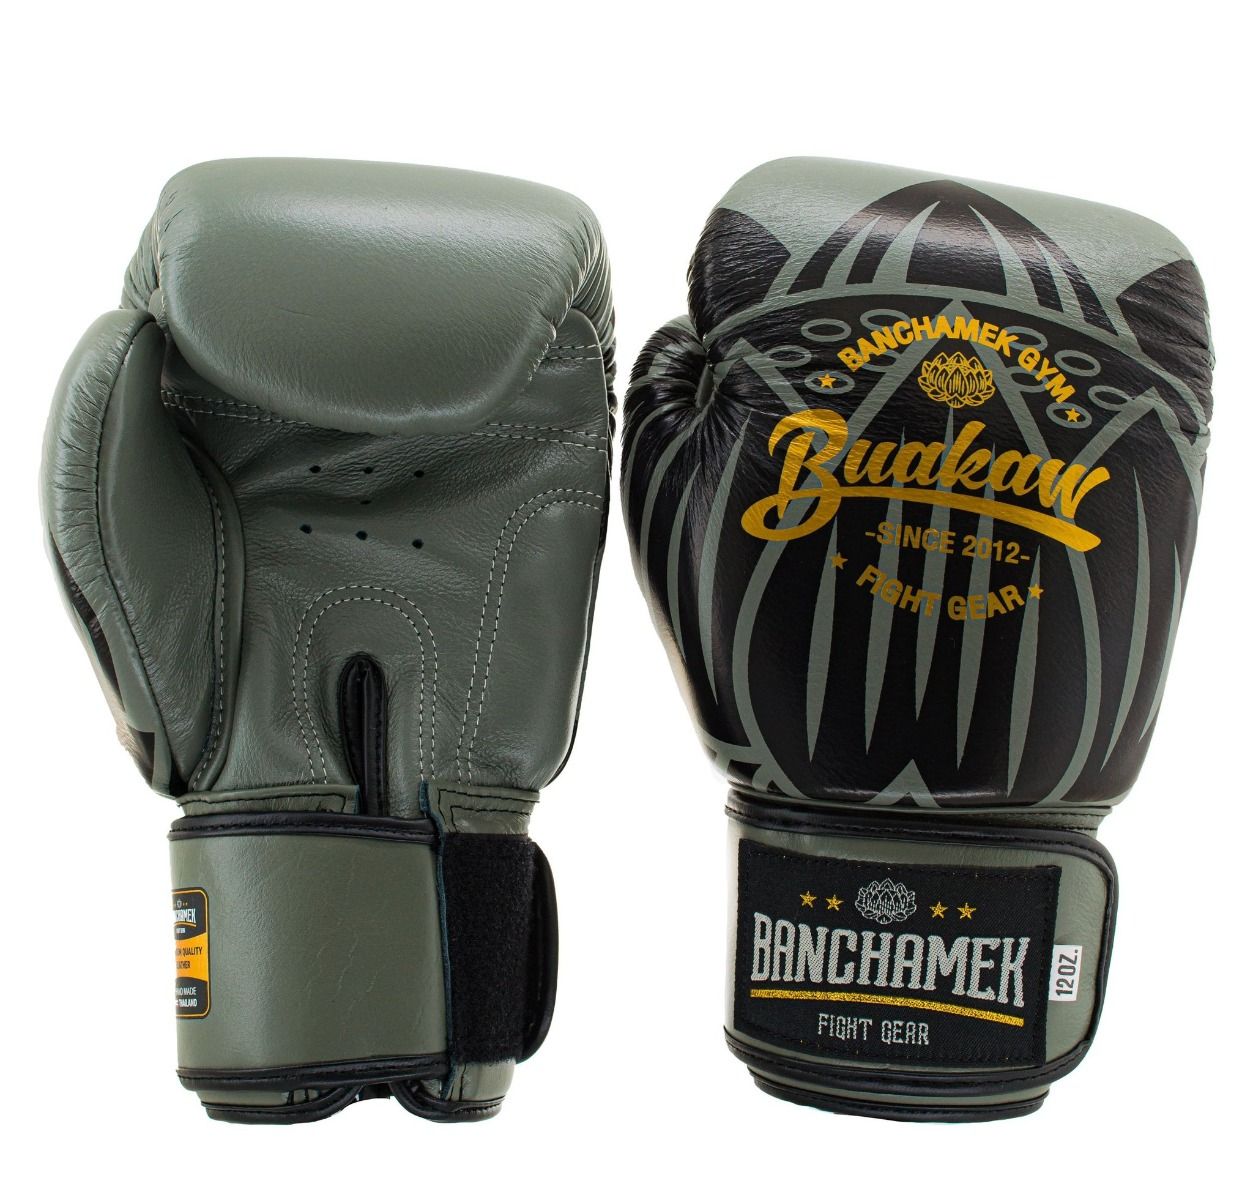 BANCHAMEK Leather Boxing Gloves BUAKAW 3 Green